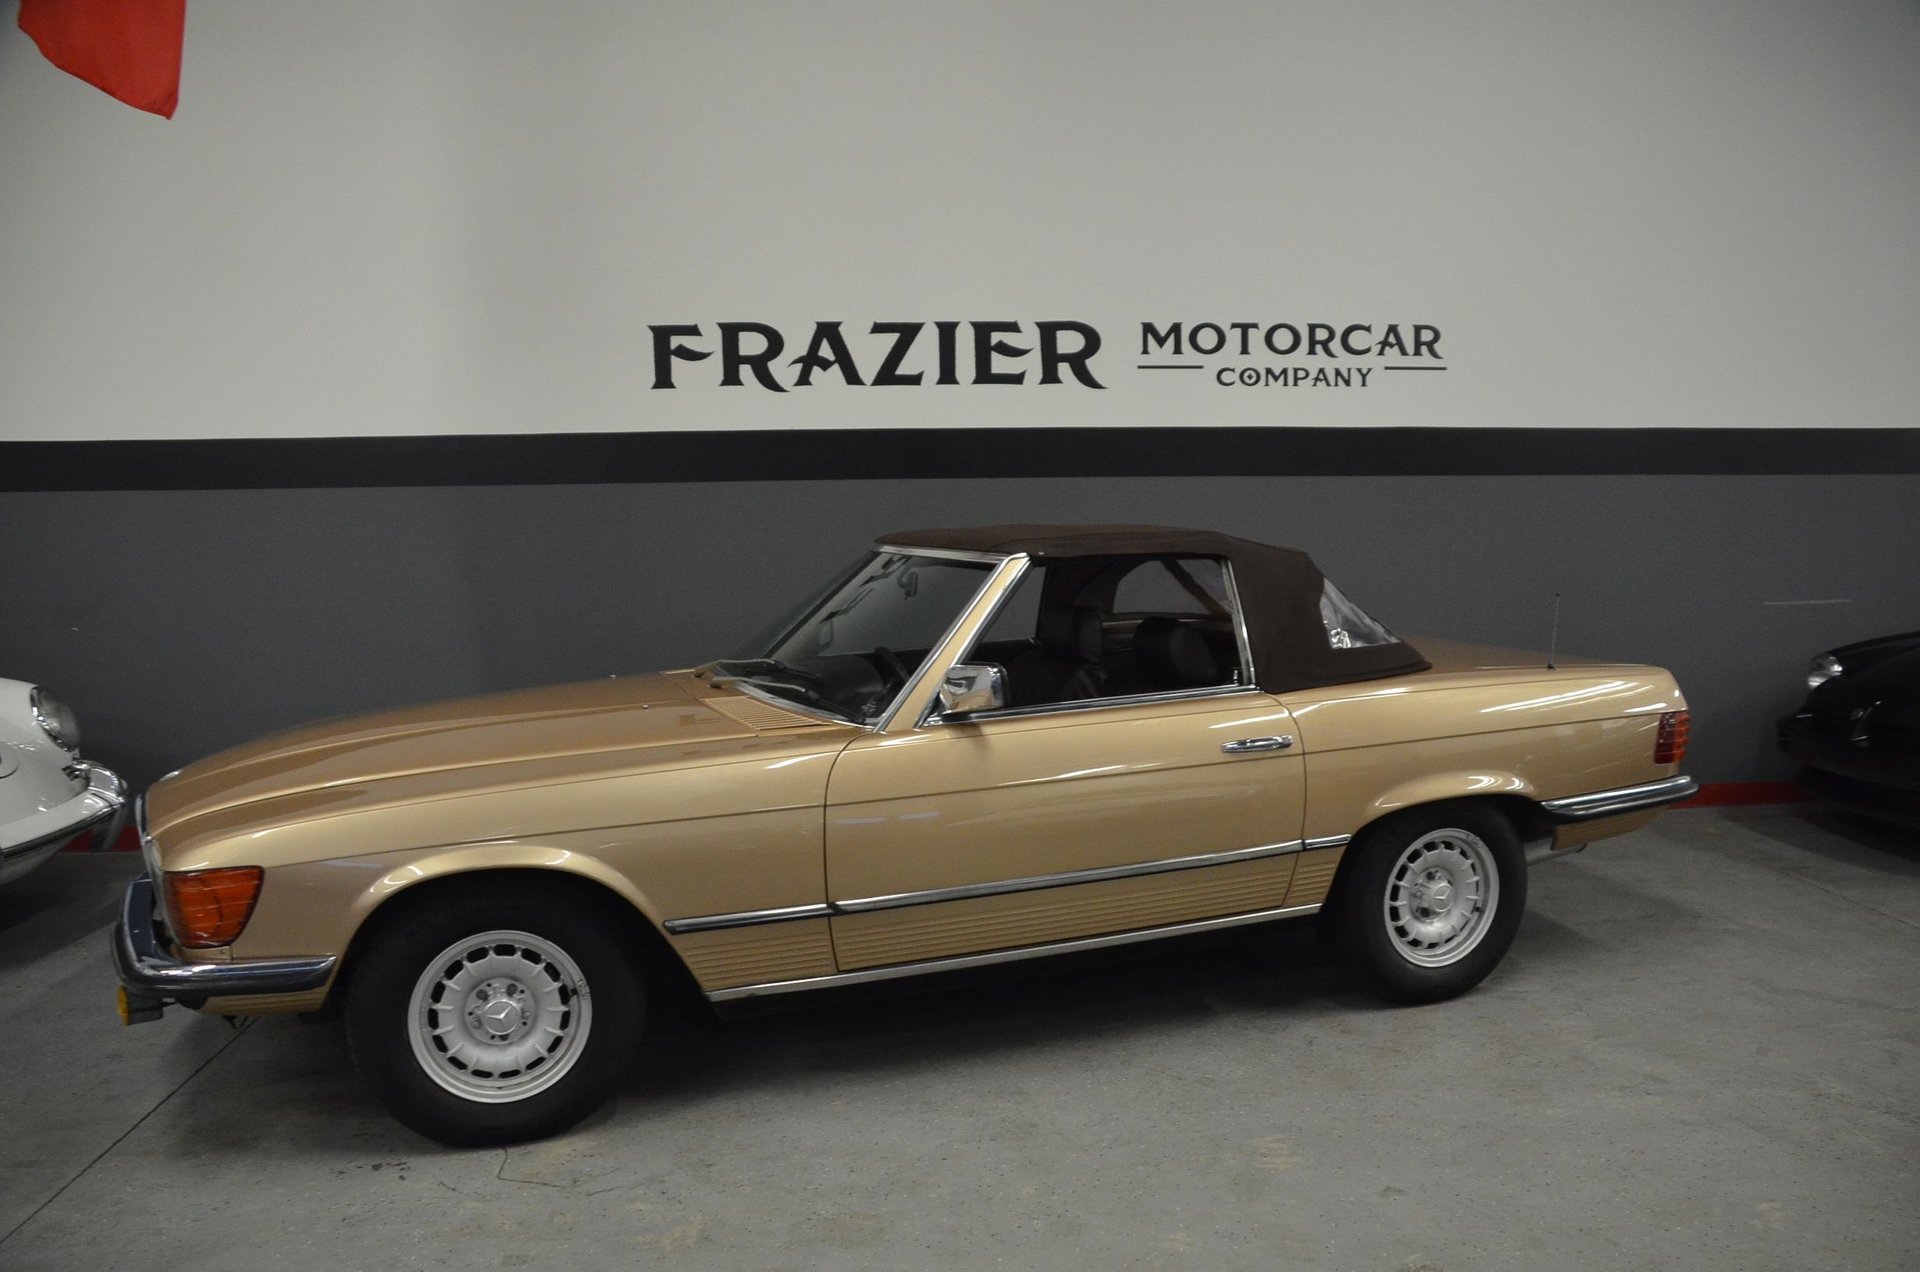 1983 Mercedes-Benz 280 SL | Frazier Motorcar Company